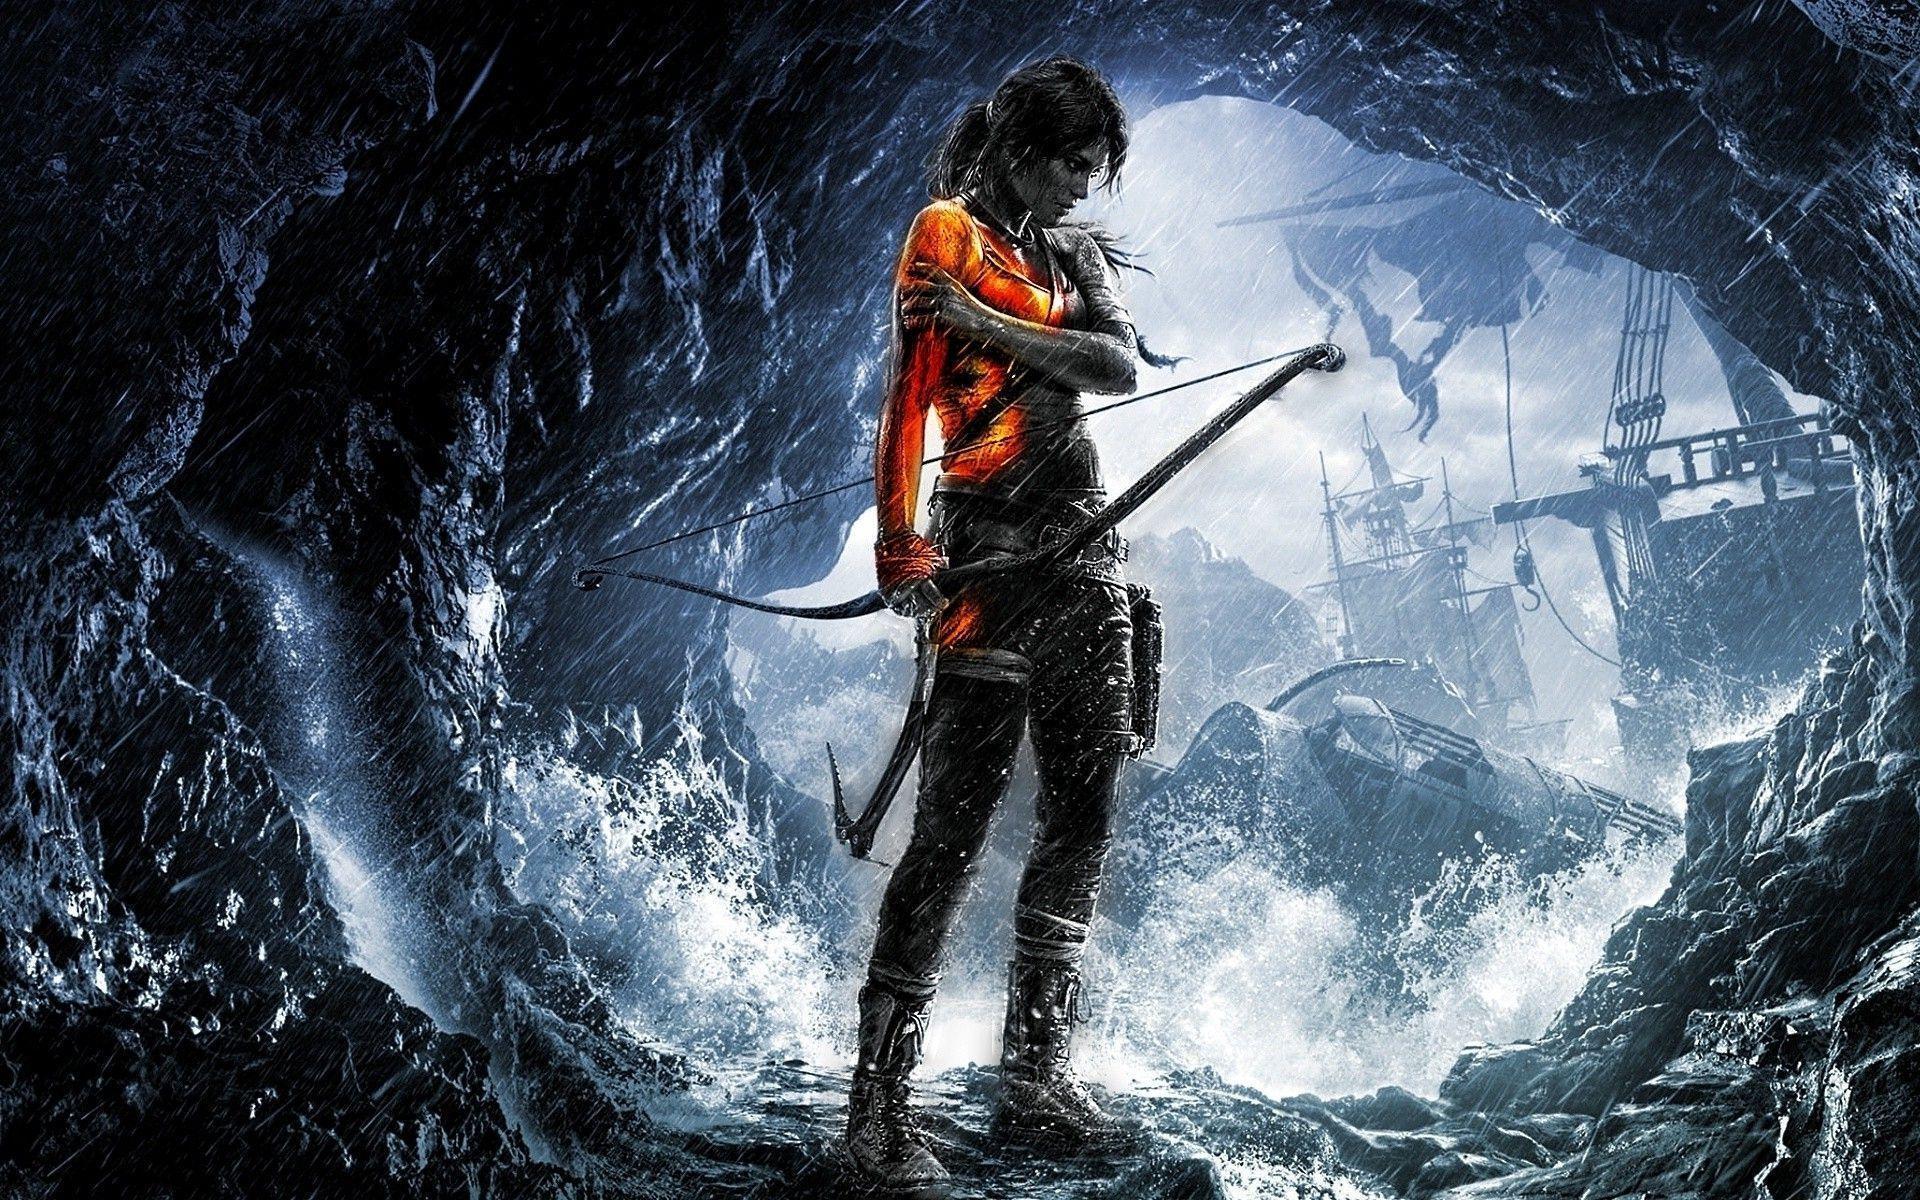 Rise Of The Tomb Raider Logo